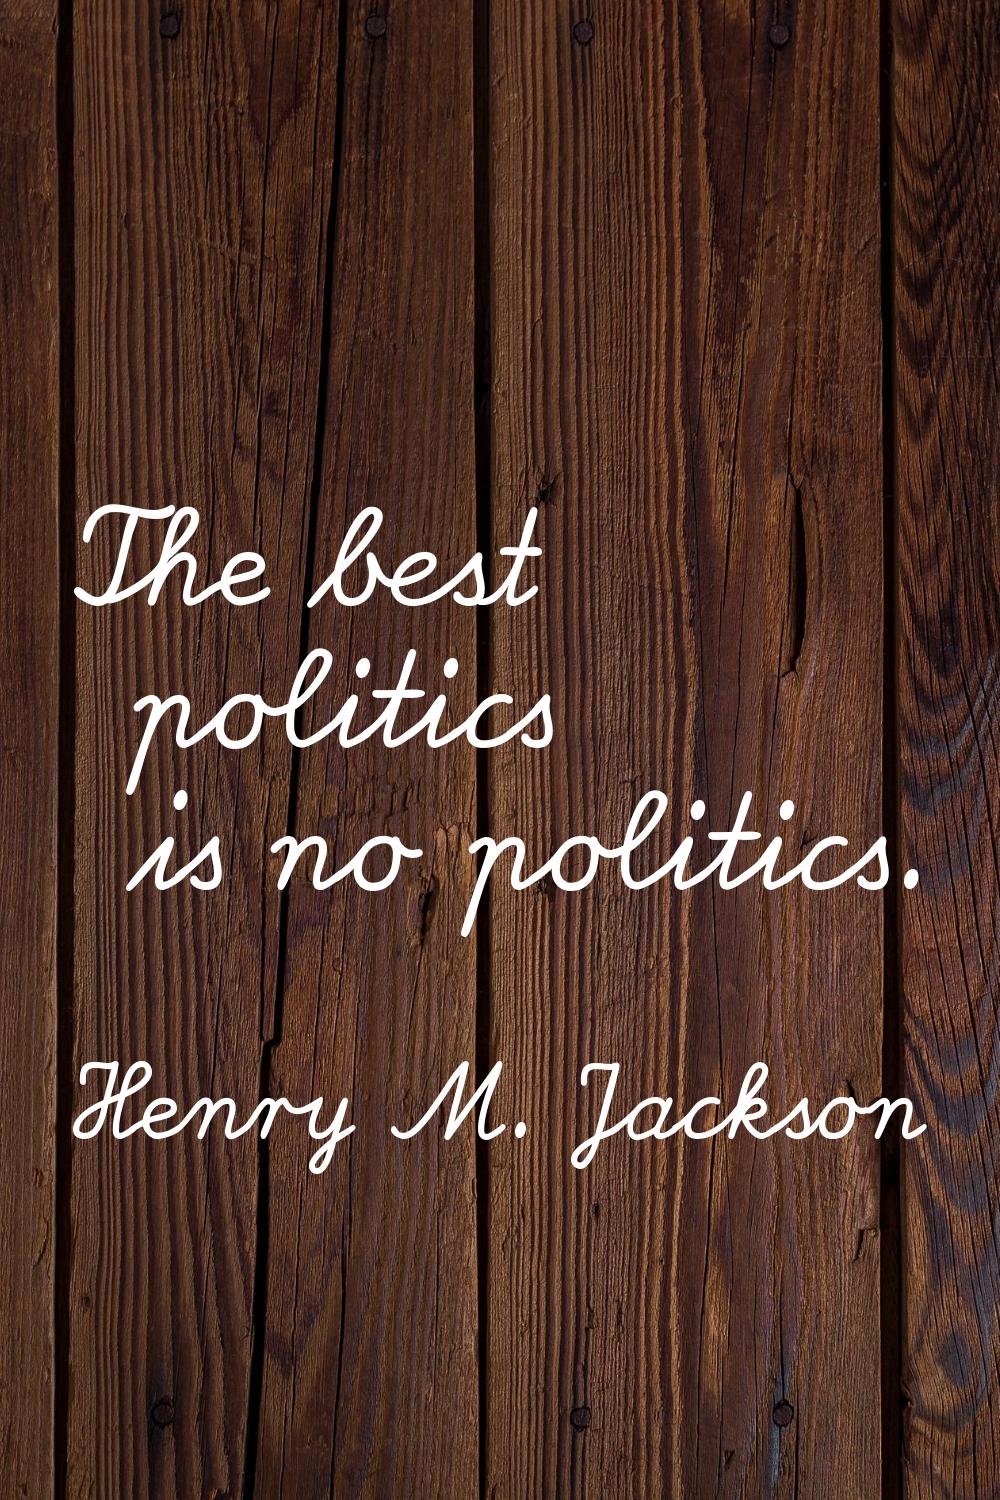 The best politics is no politics.